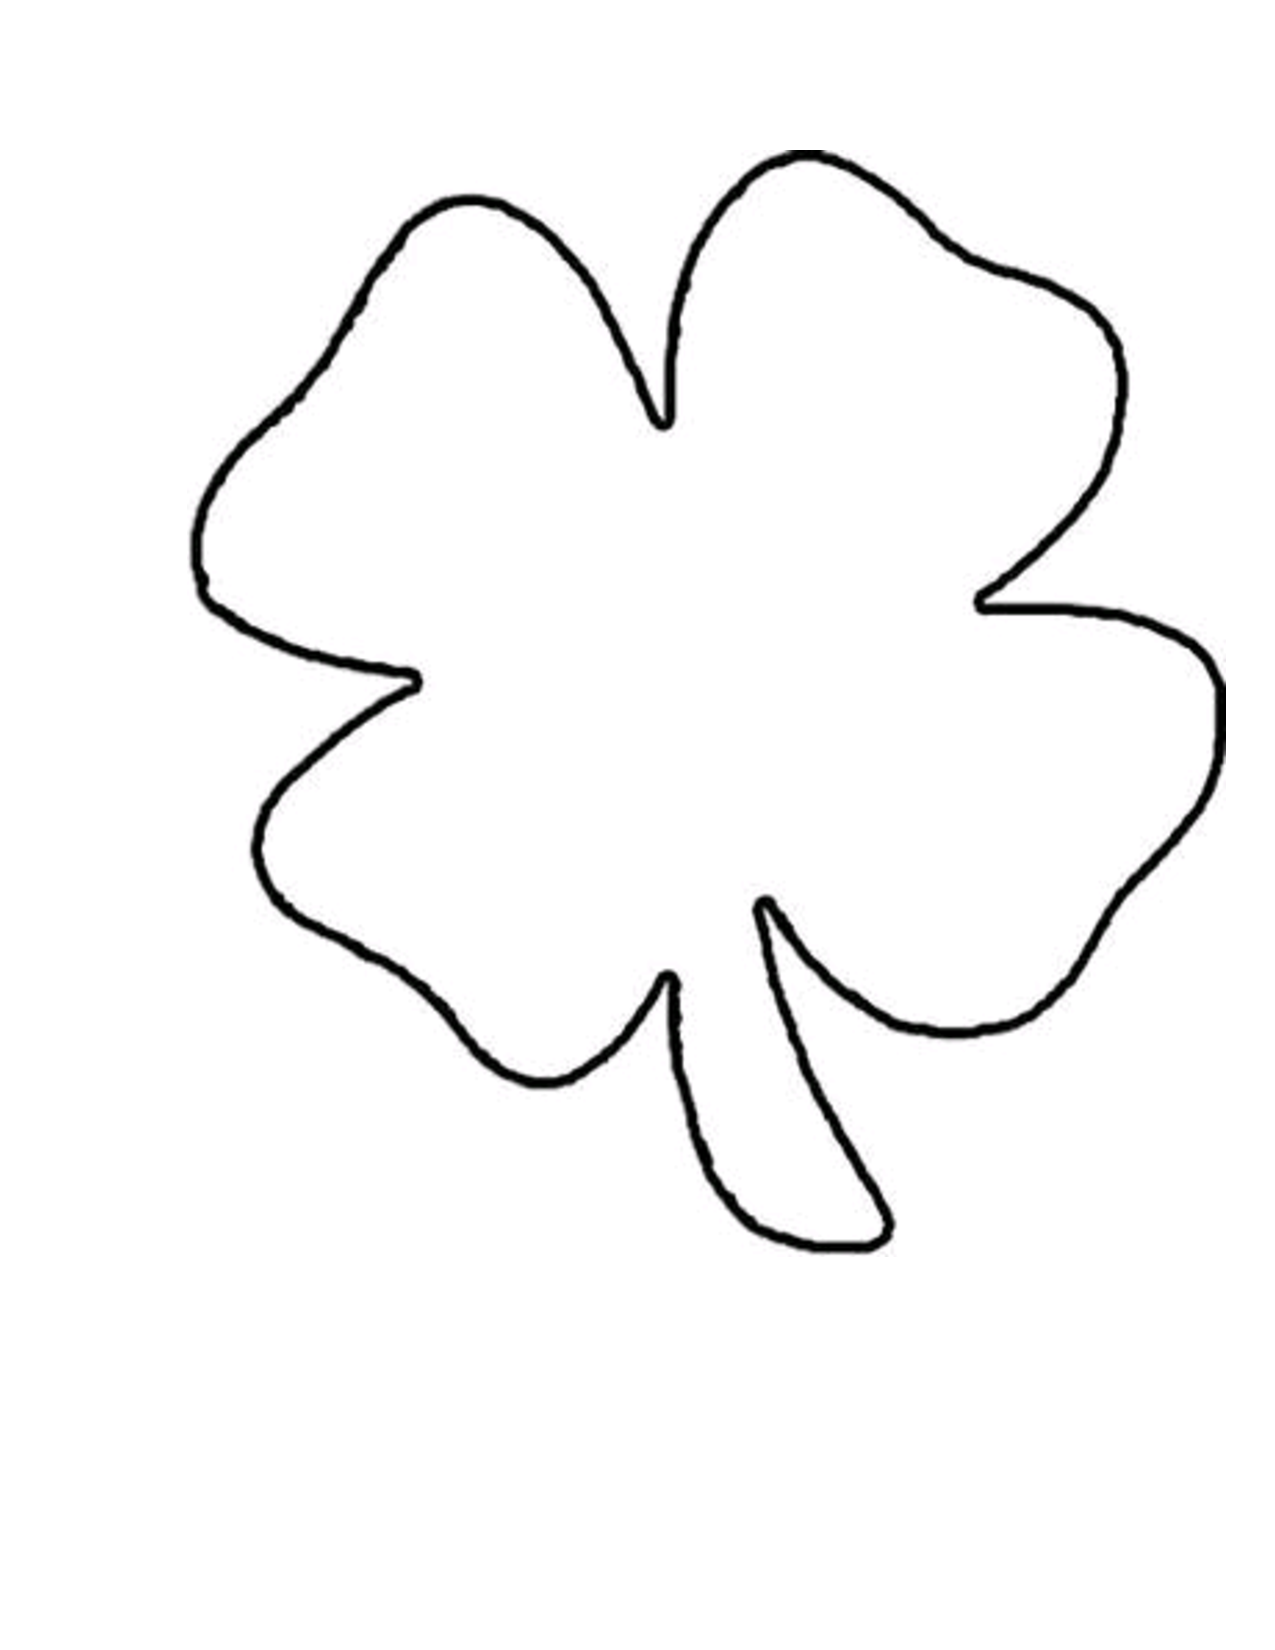 free-four-leaf-clover-outline-download-free-four-leaf-clover-outline-png-images-free-cliparts